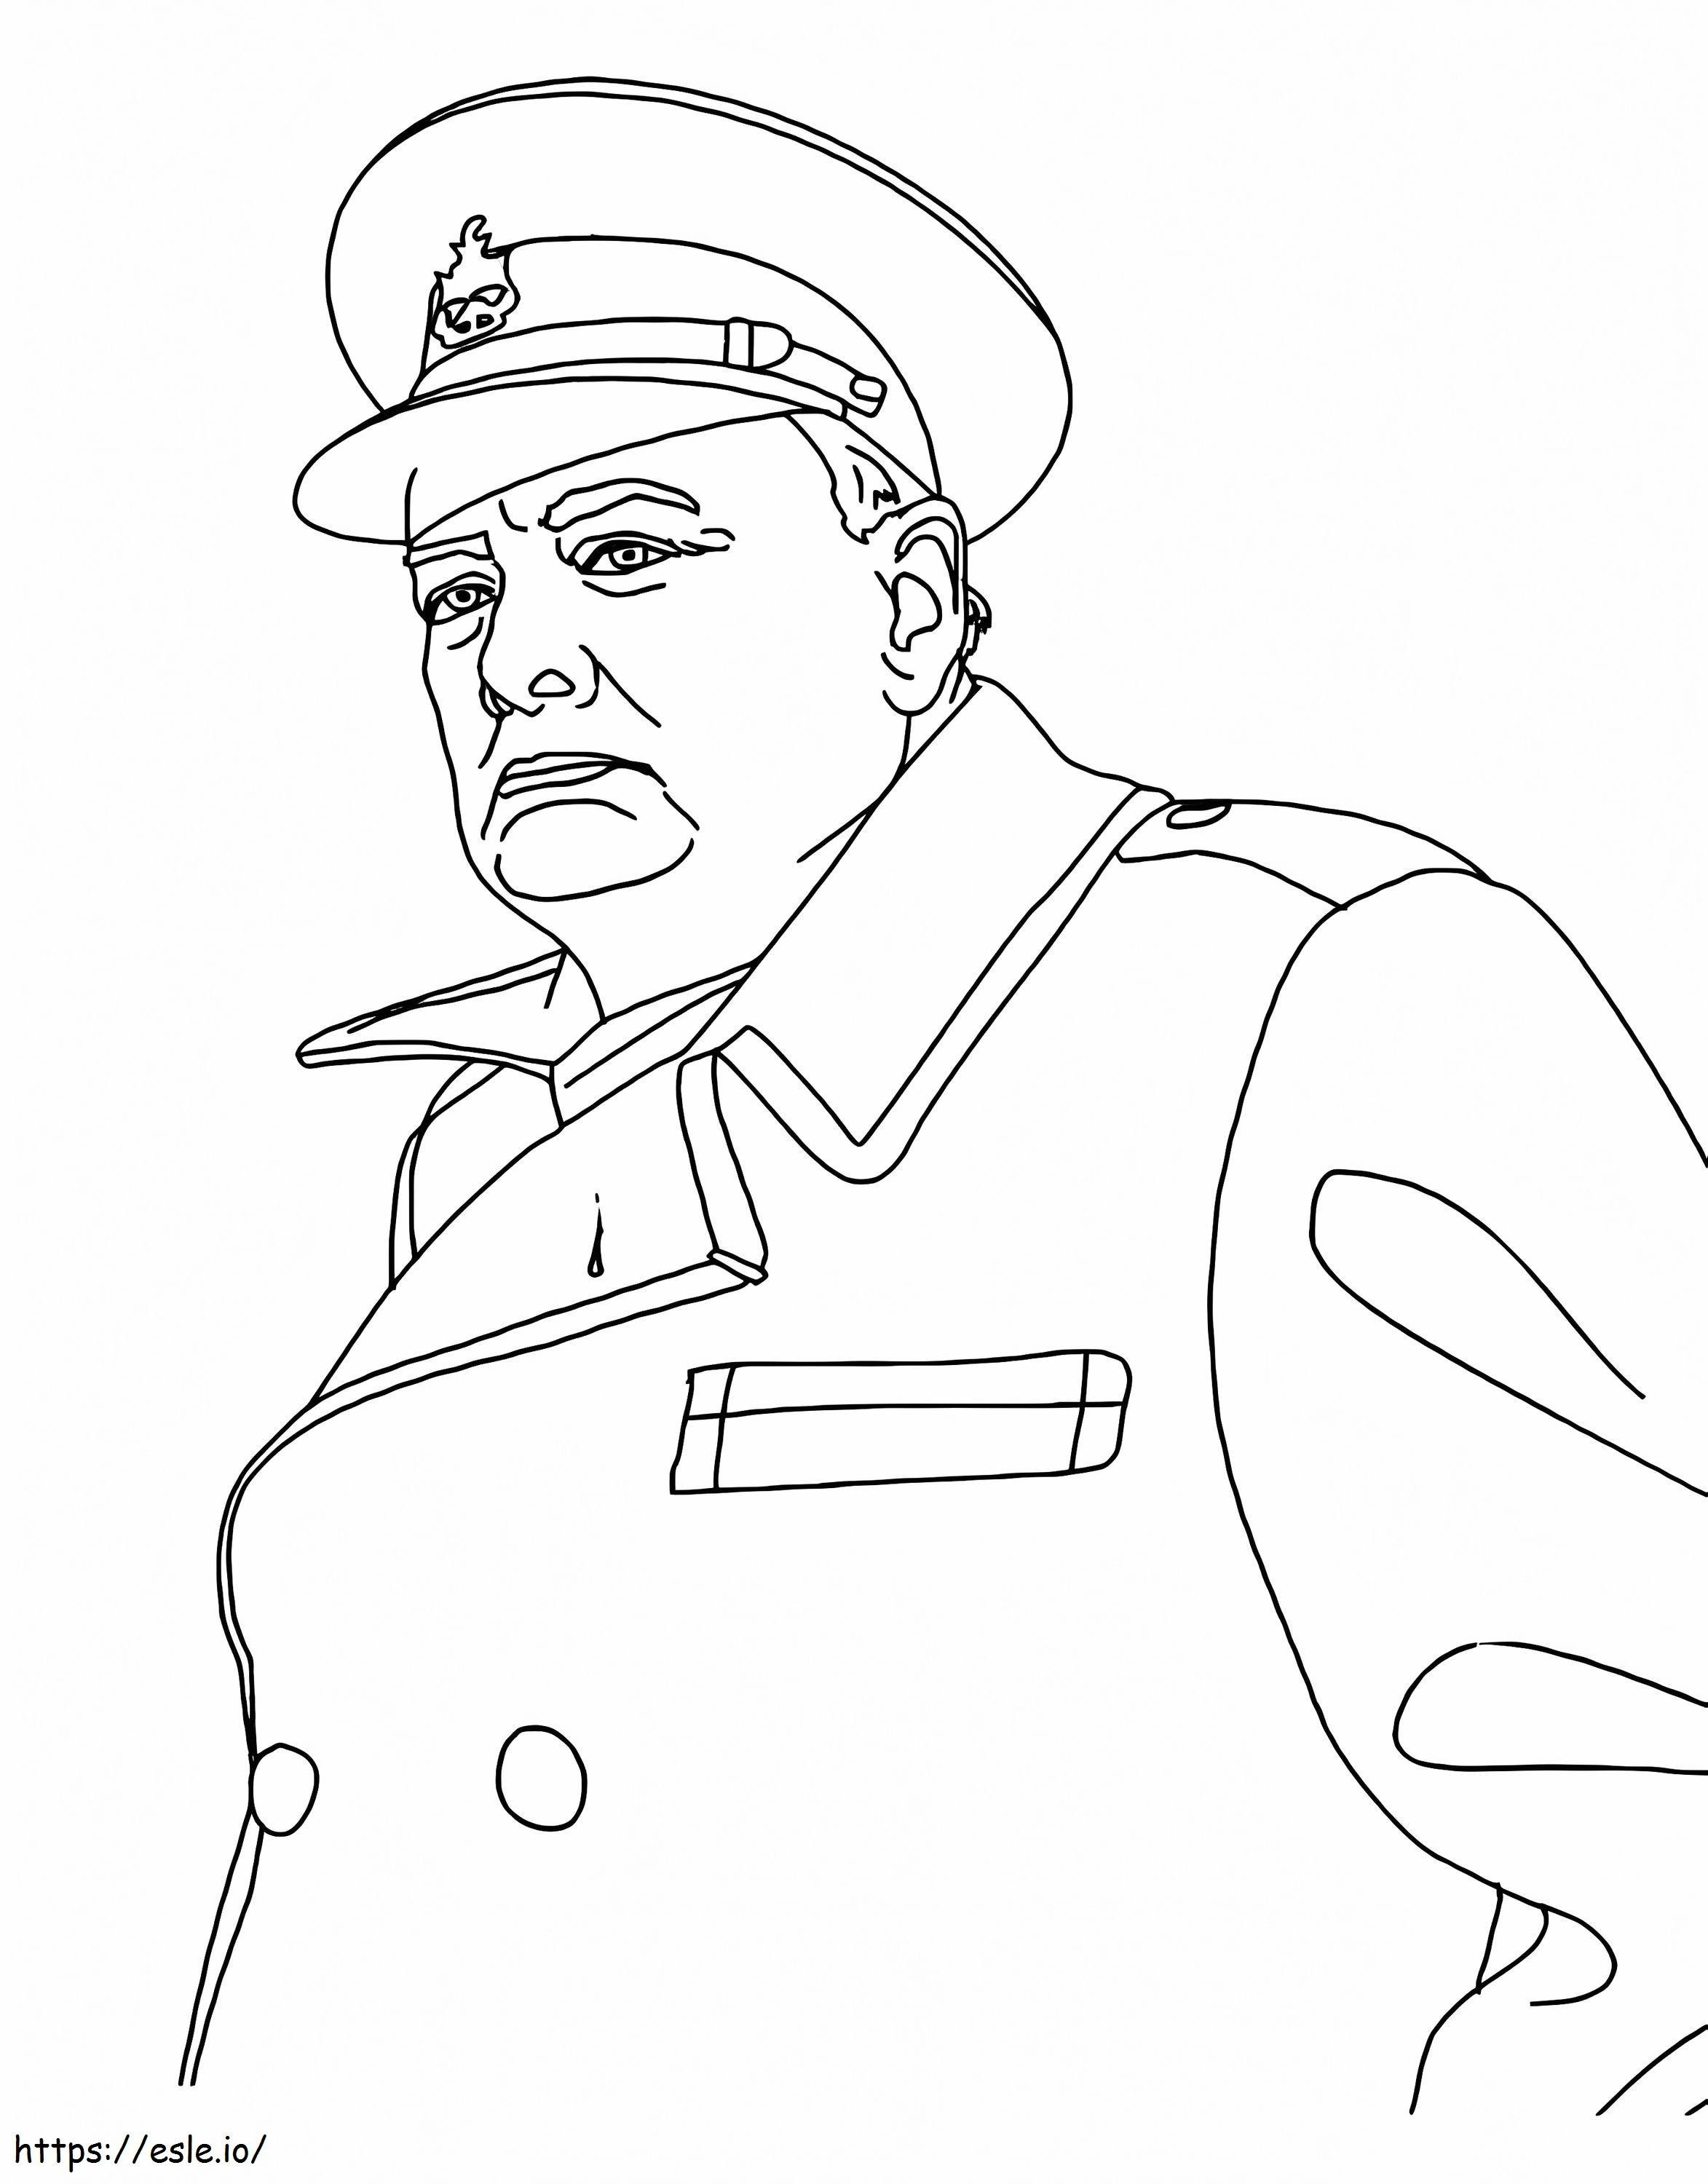 Winston Churchill 2 coloring page